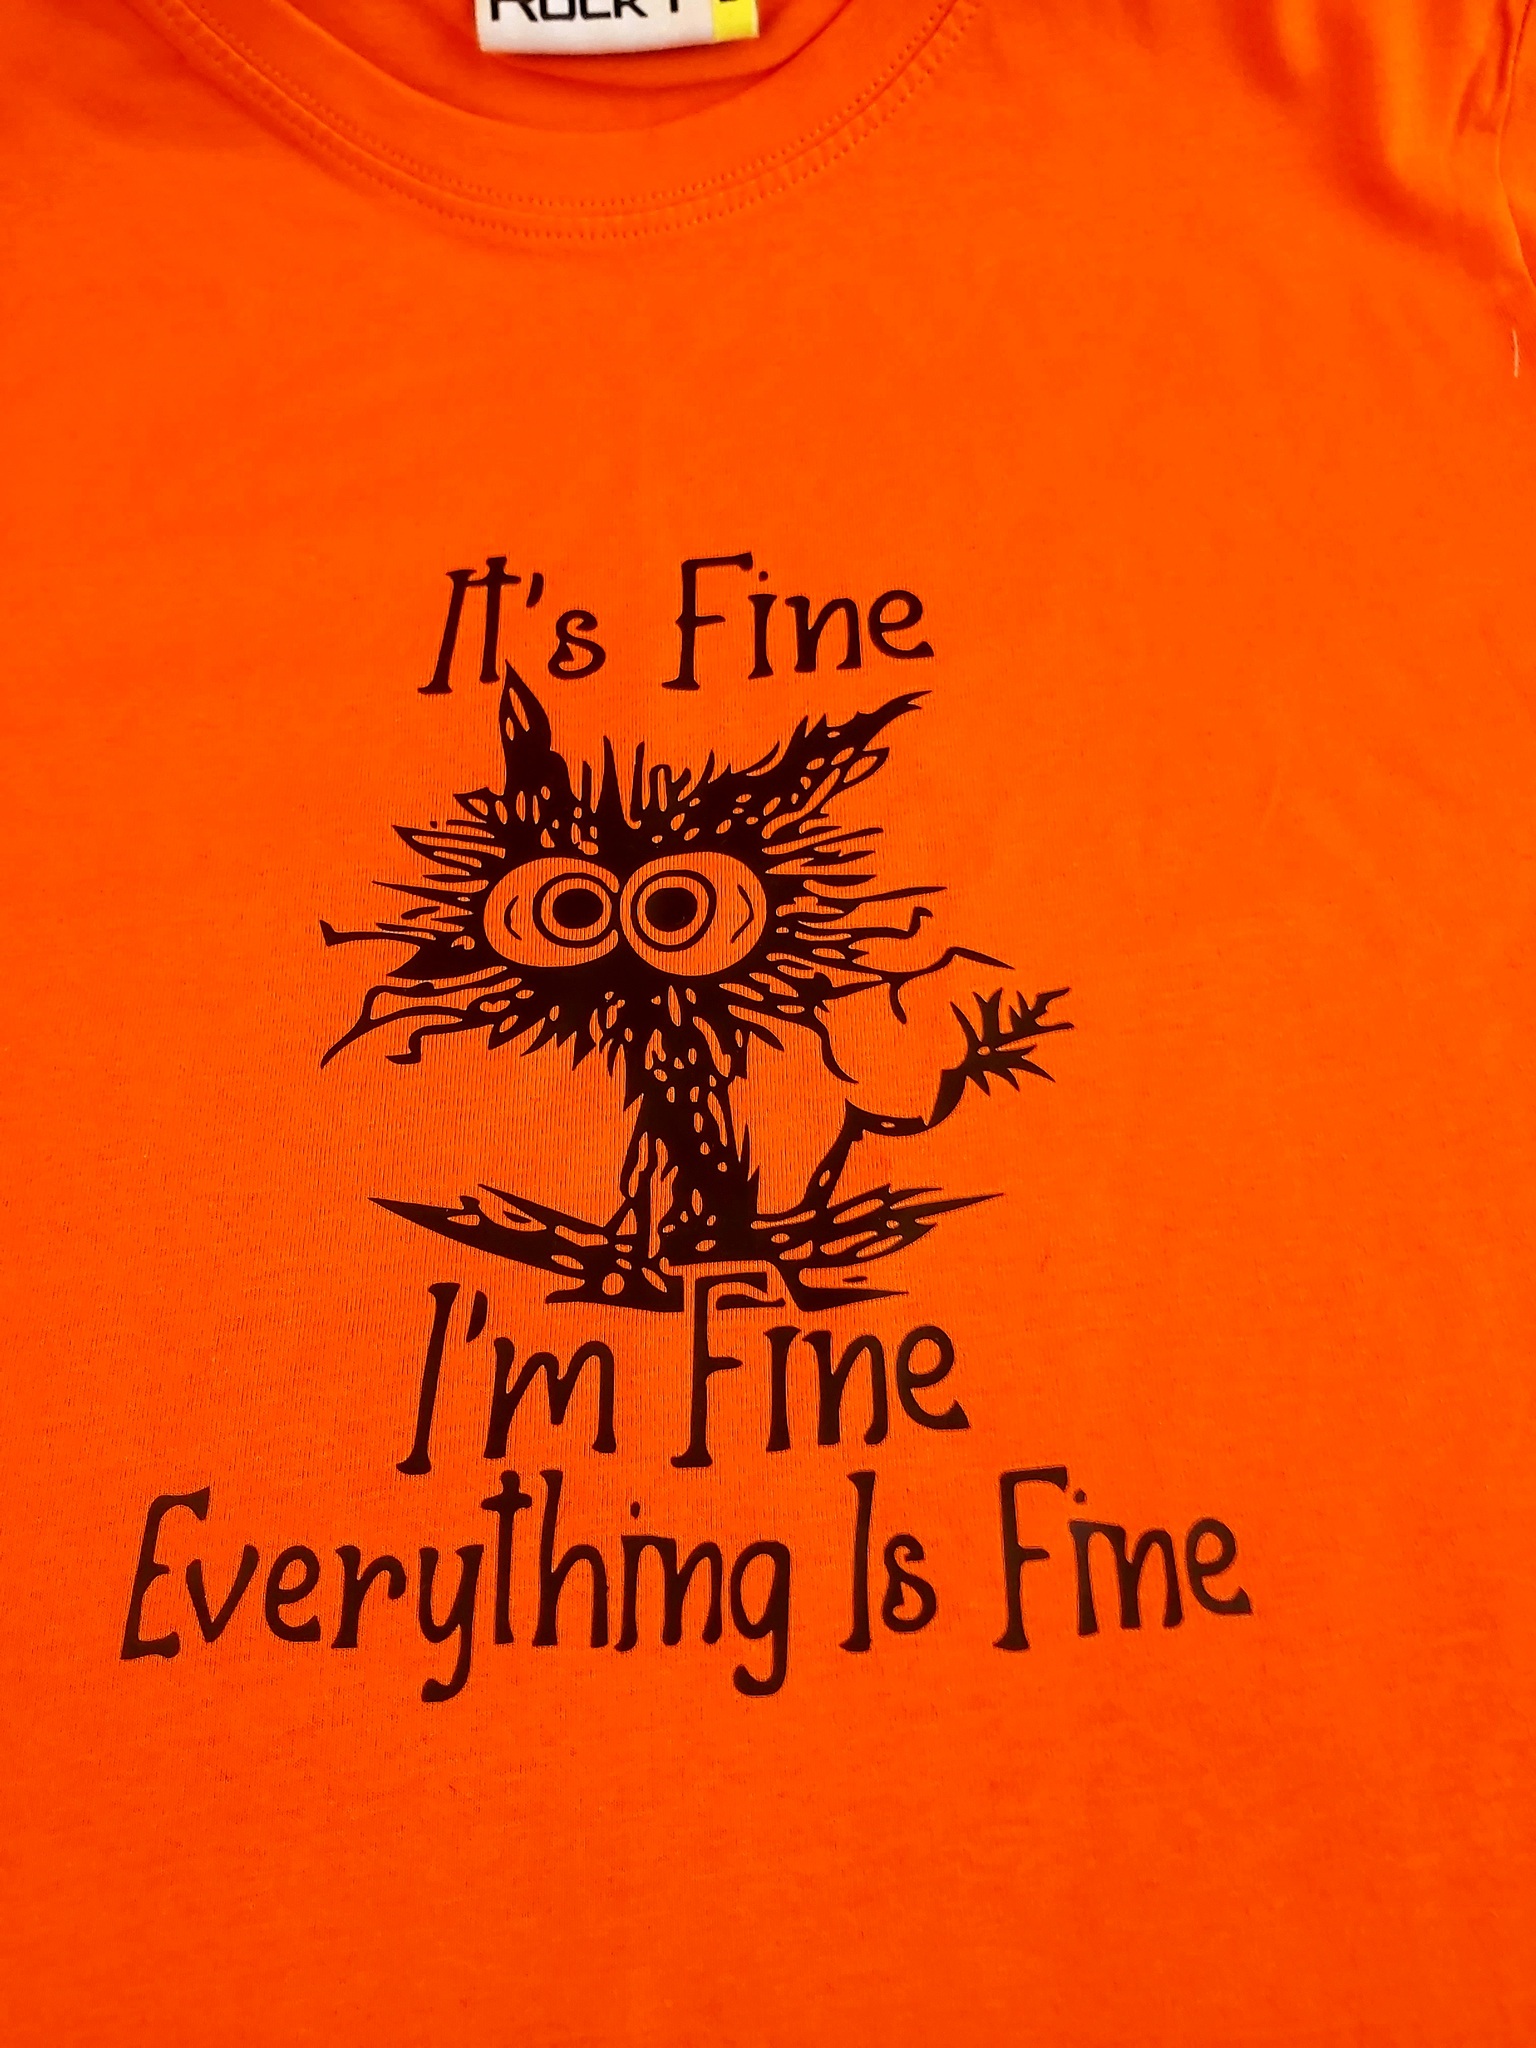 Its fine t-shirt